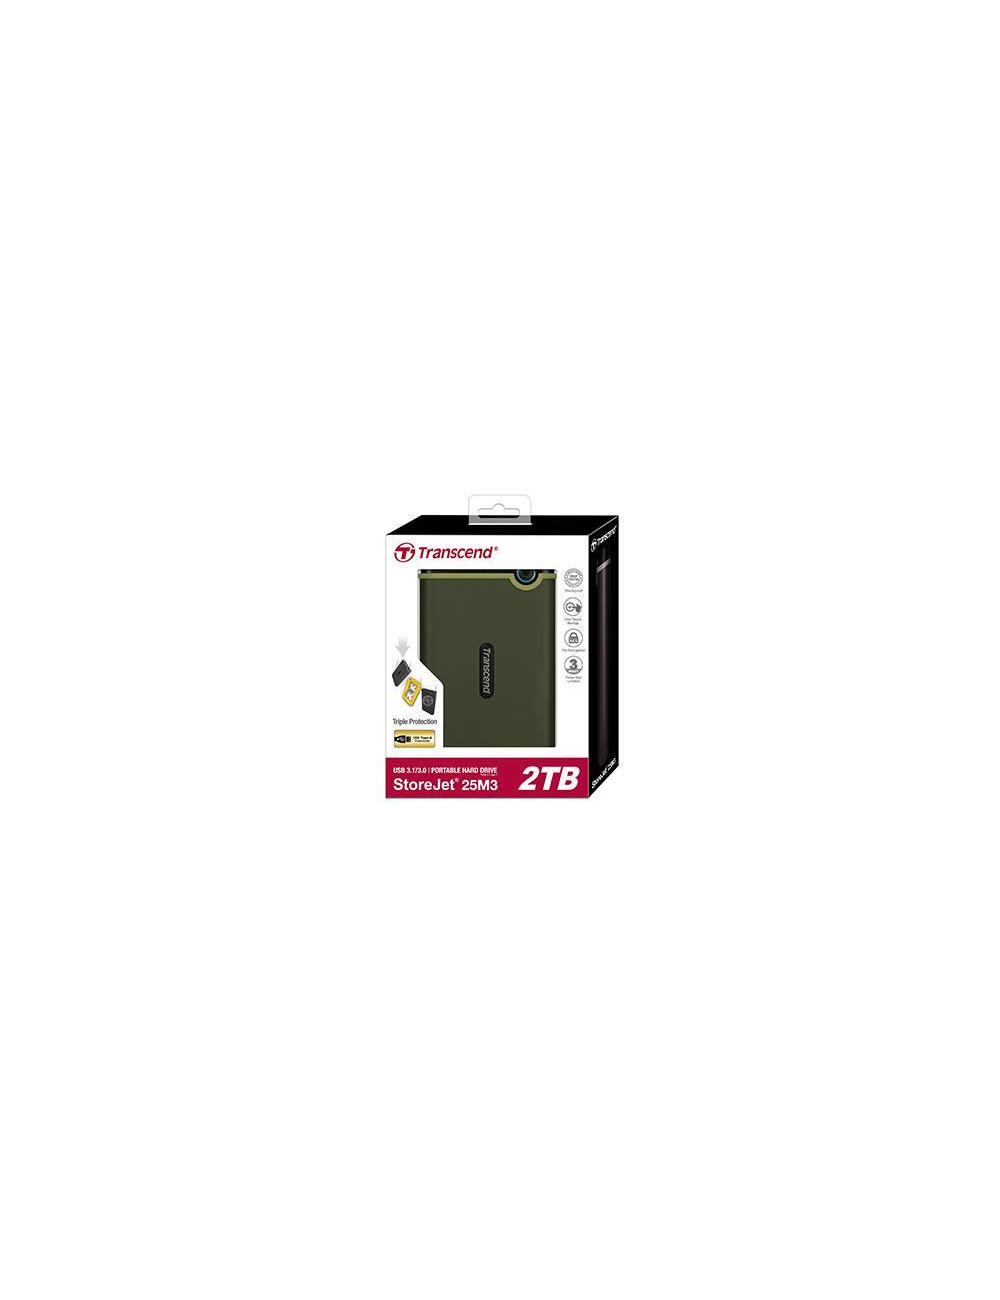 External HDD|TRANSCEND|StoreJet|2TB|USB 3.0|Colour Green|TS2TSJ25M3G